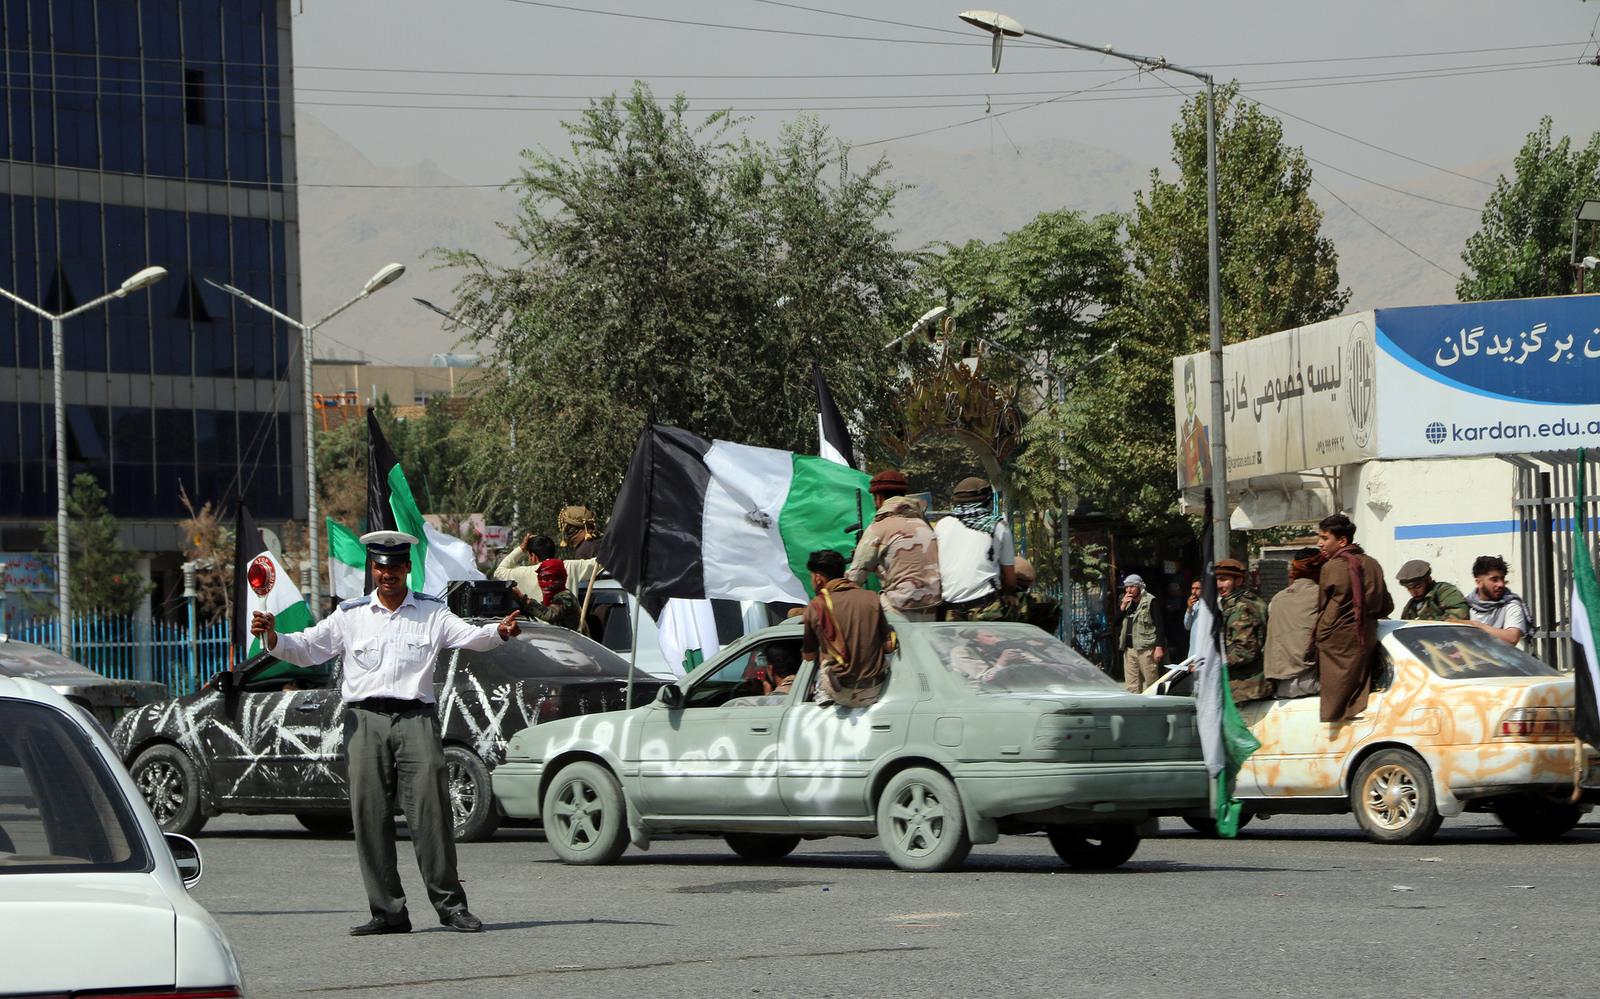 Ahmad Shah Massoud supporters